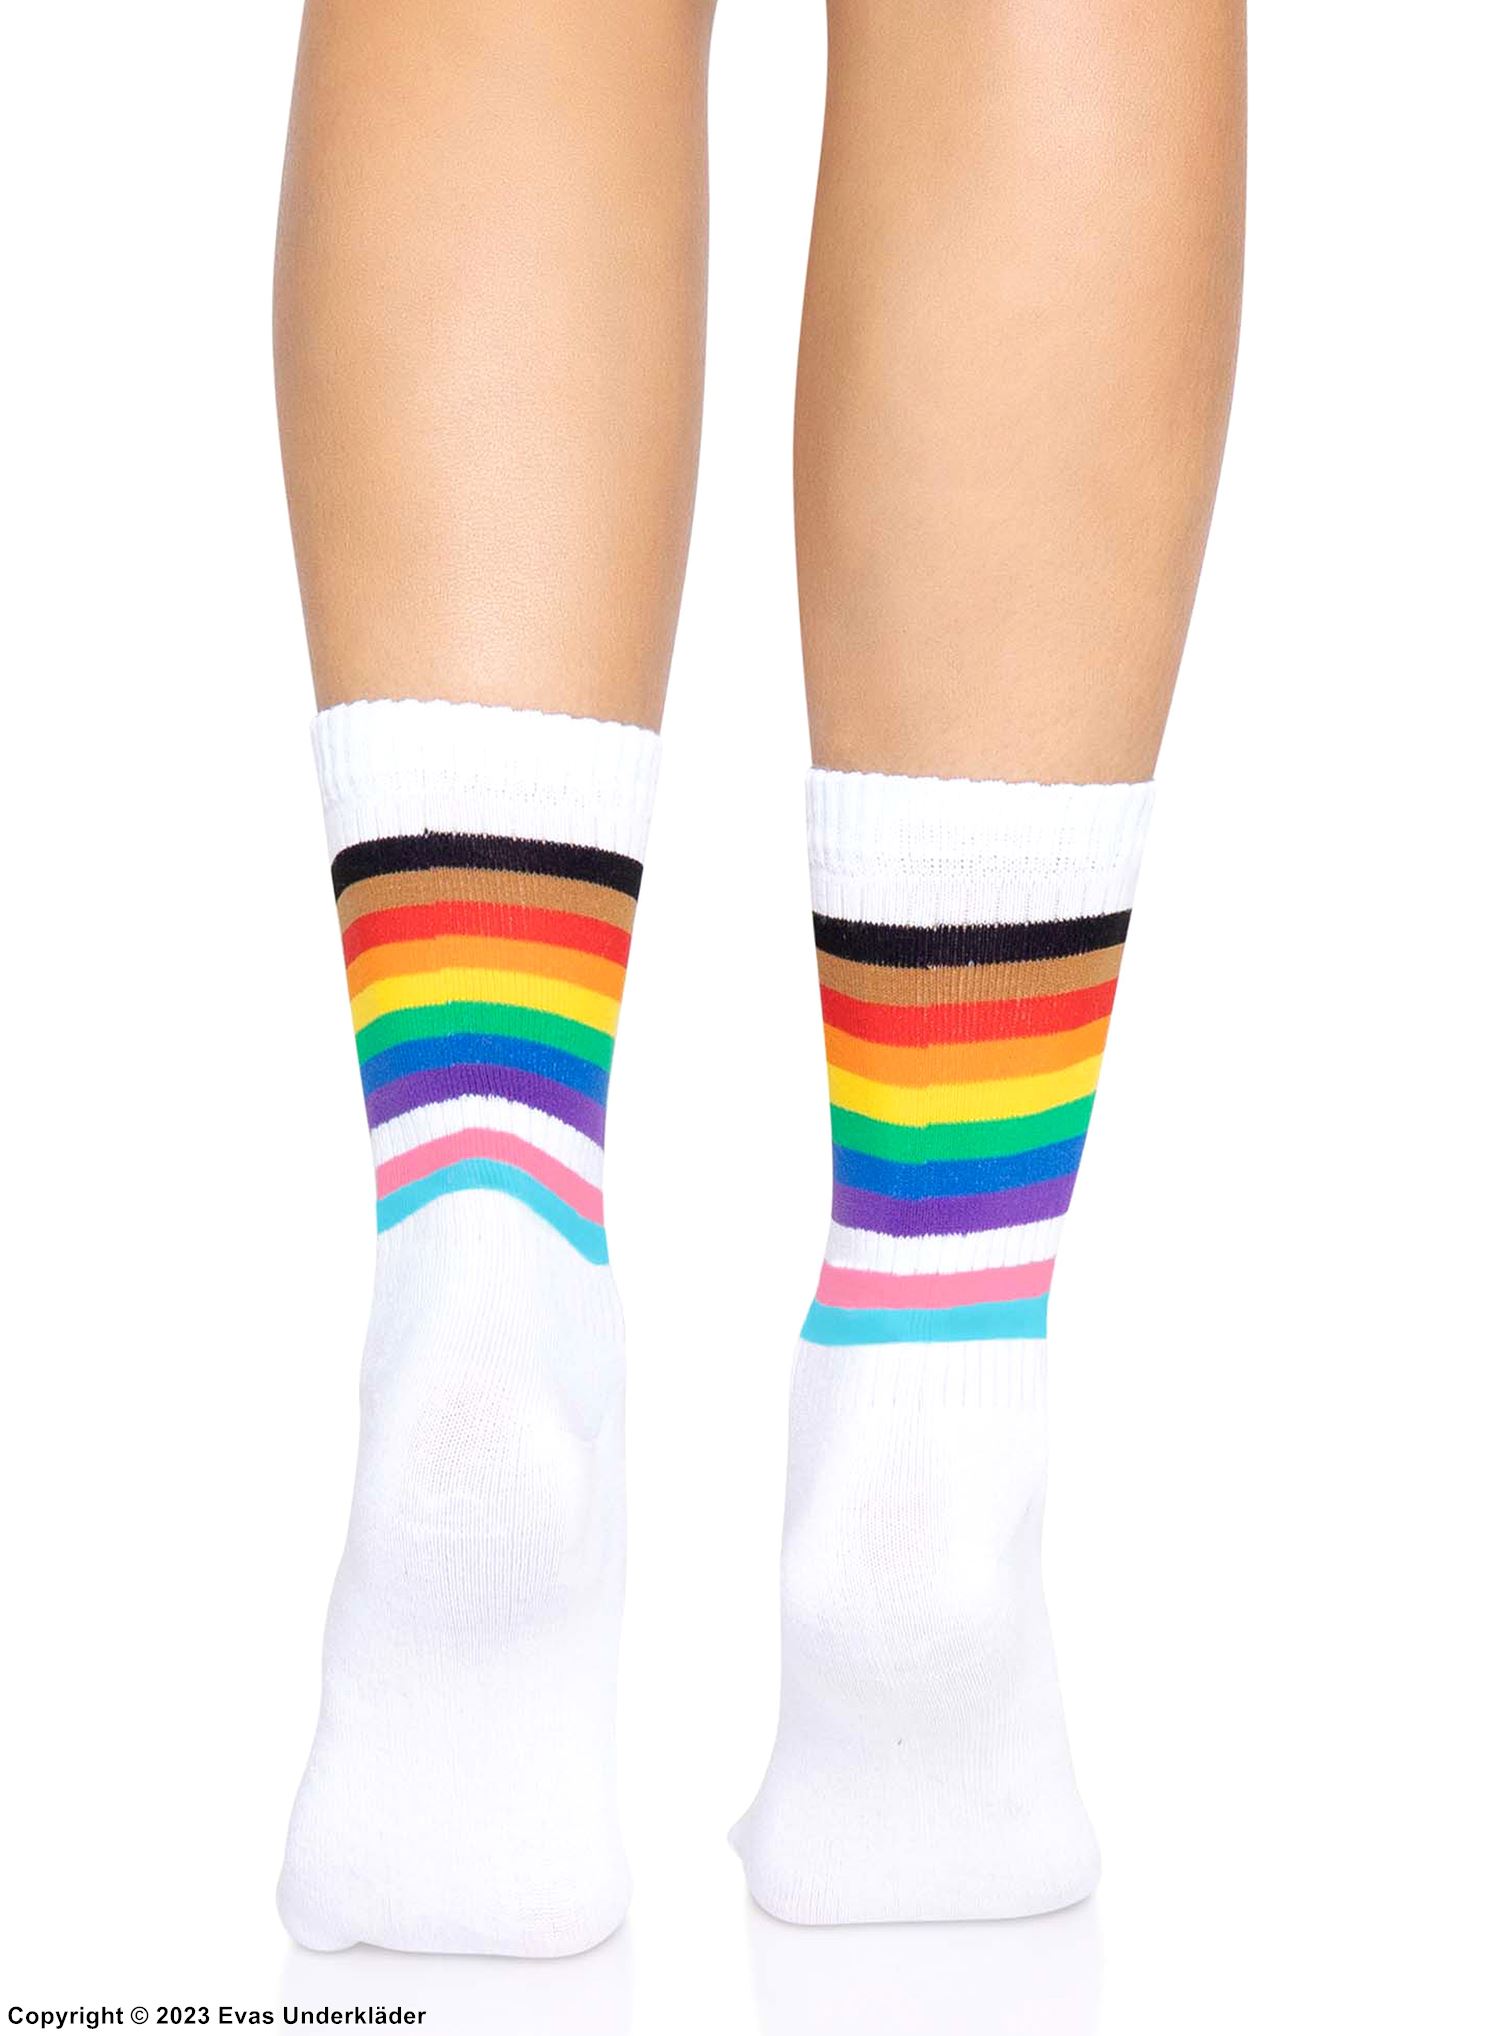 Ankle socks, rainbow color